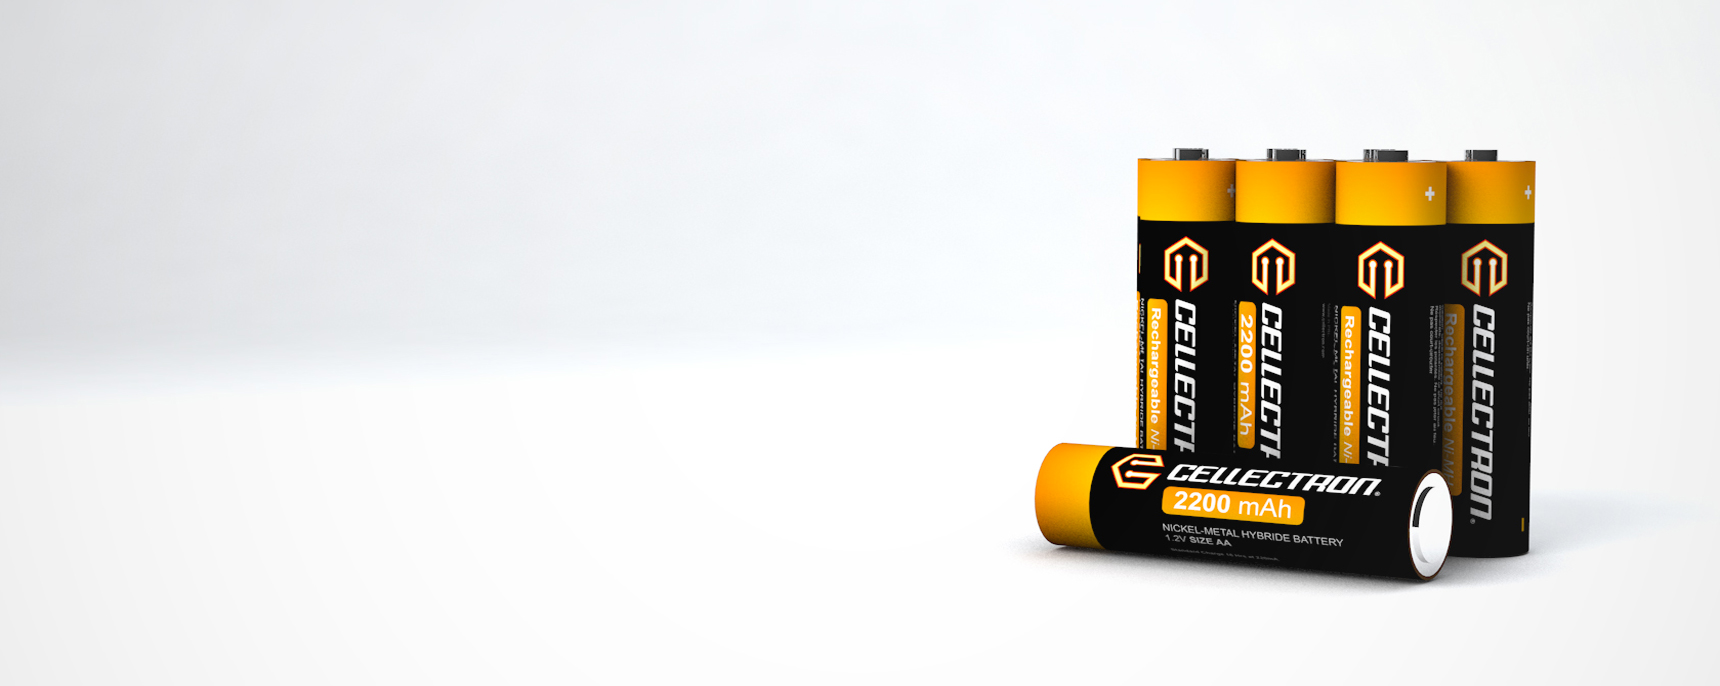 Batteries AASatisfaction guaranteed